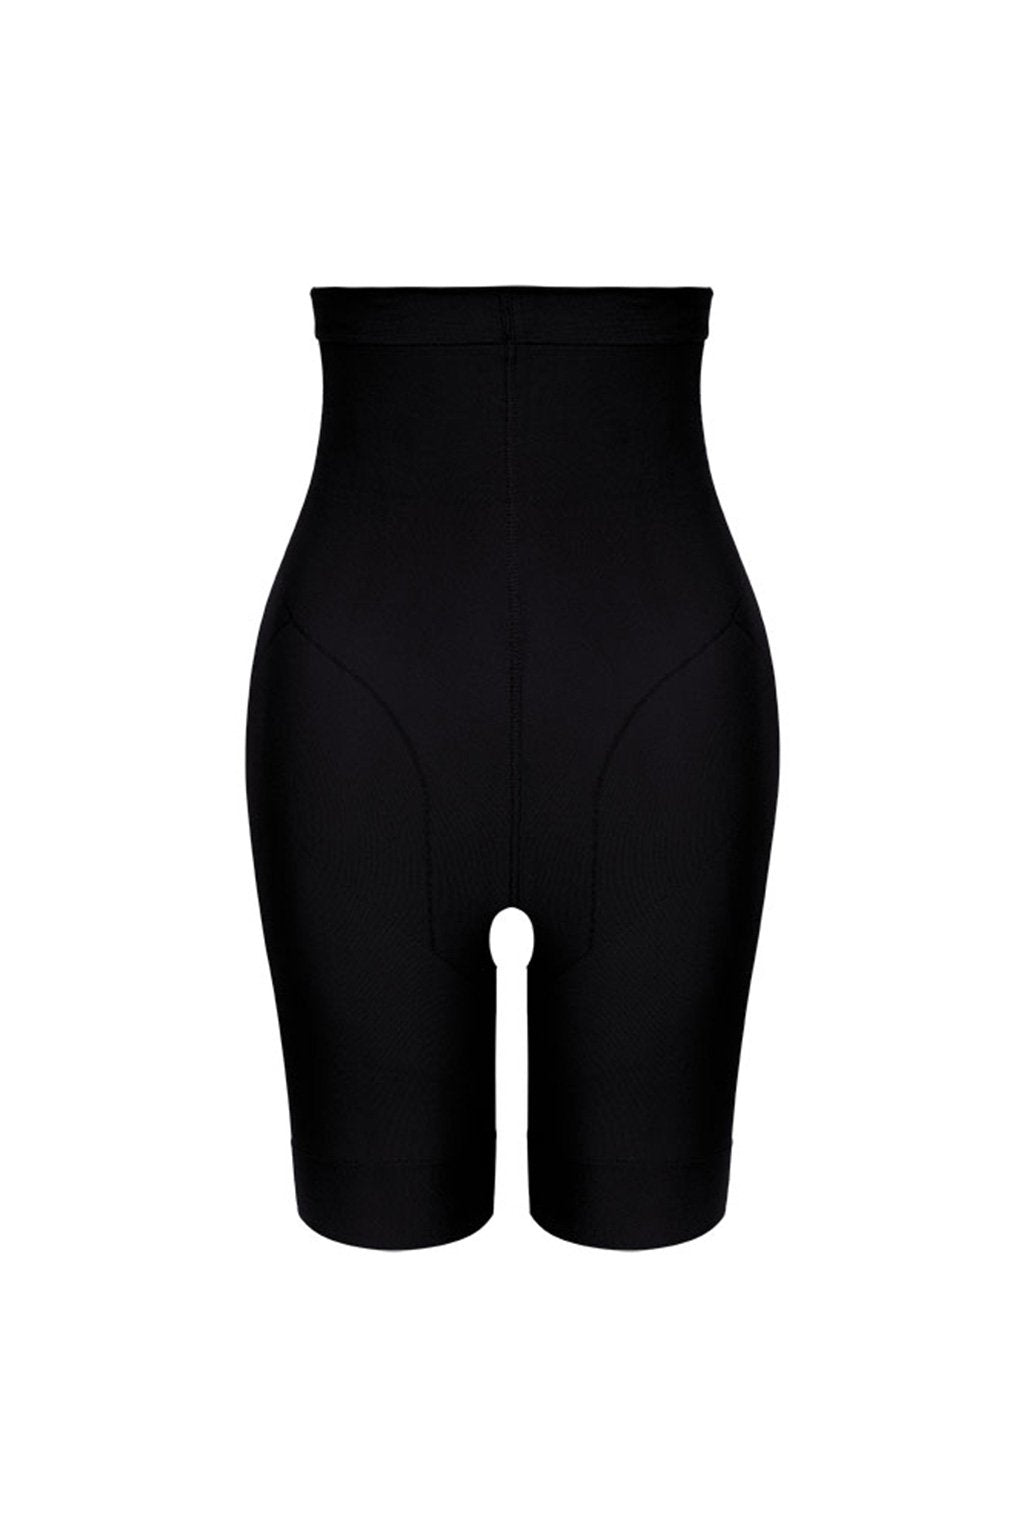 FLEXEES Black High Waist Shorts Body Shaper Shapewear - Style M03915 - Size  XL